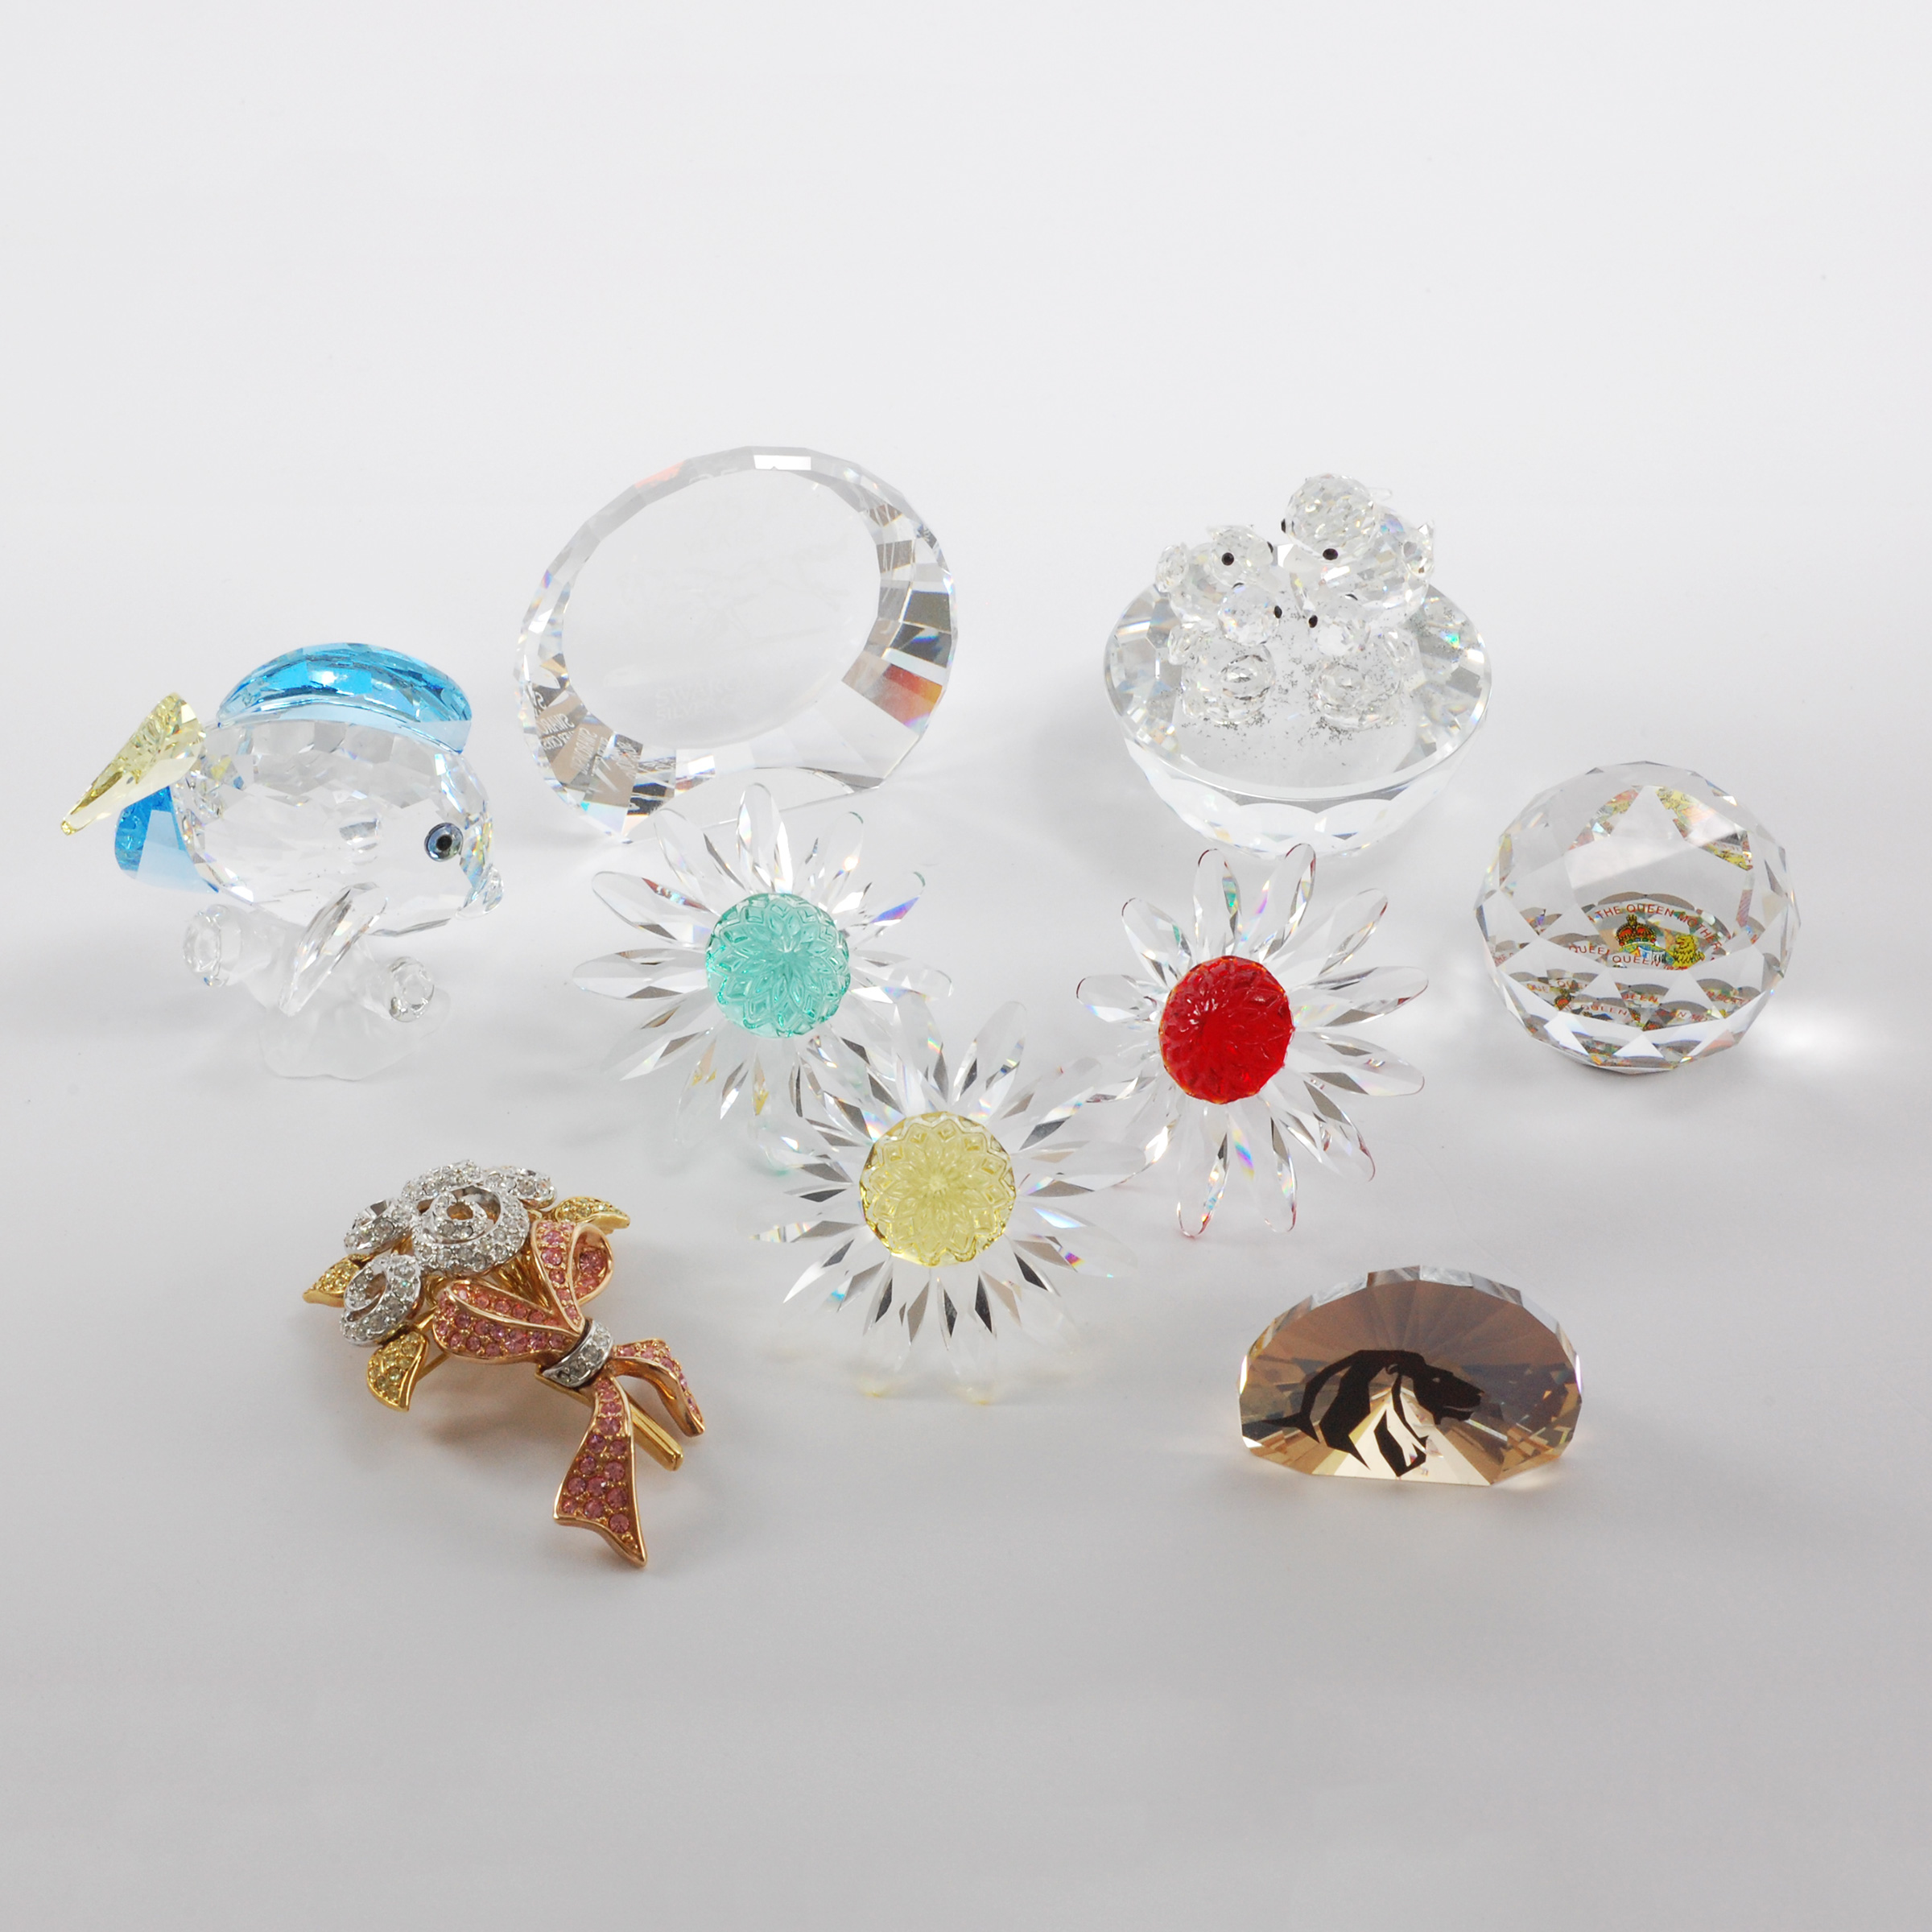 Nine Swarovski Crystal Decorative Objects, late 20th/early 21st century